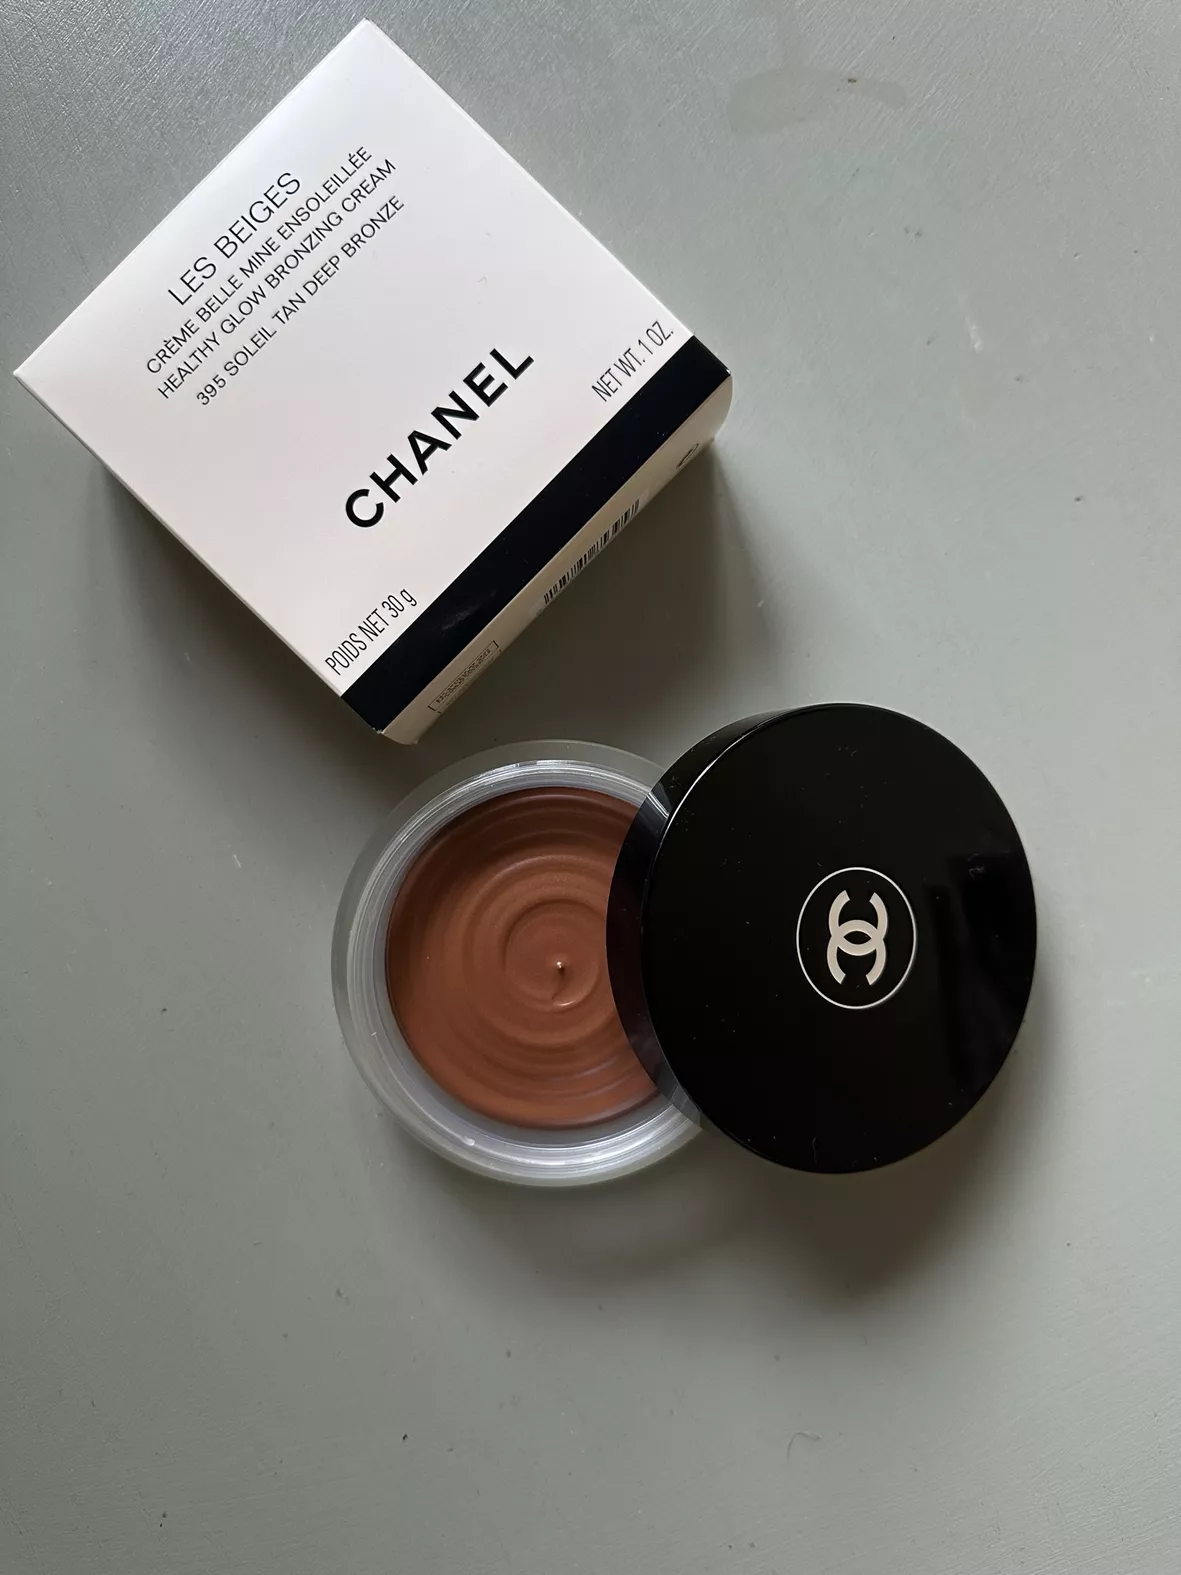 NEW Chanel Les Beiges Healthy Glow Cream Bronzer Tan Deep